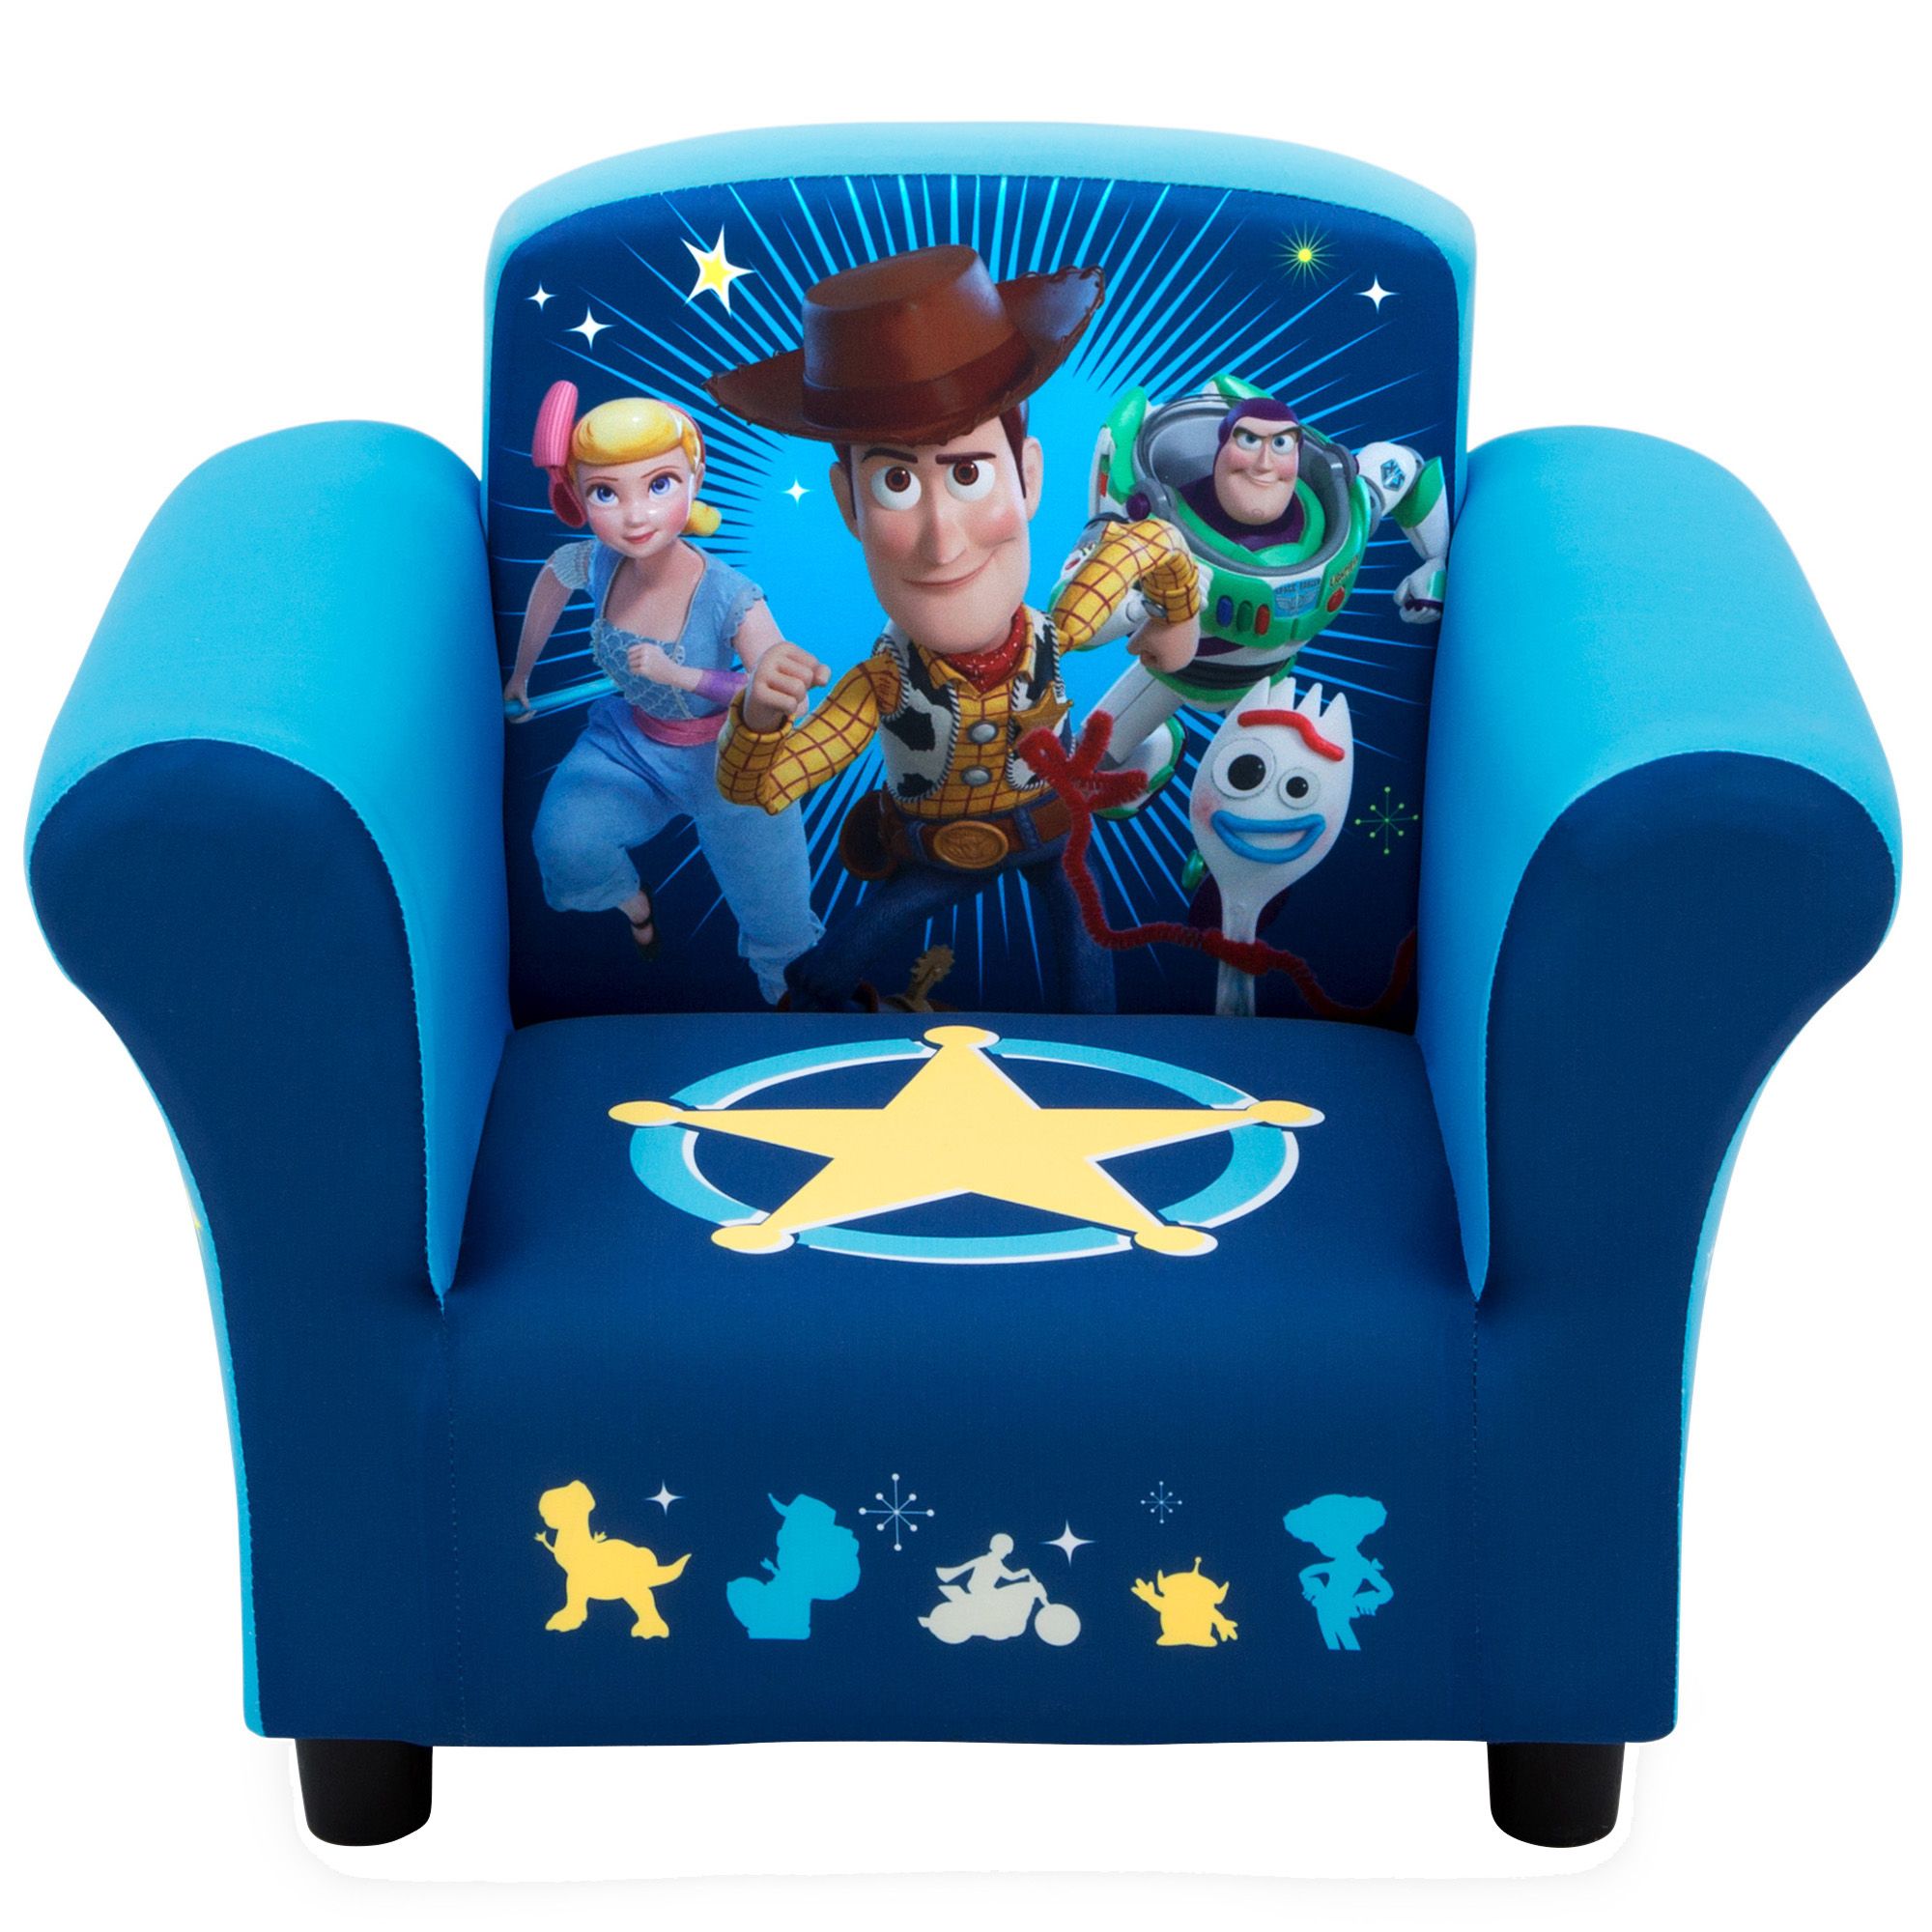 Delta Children Toy Story 4 Kids Upholstered Chair